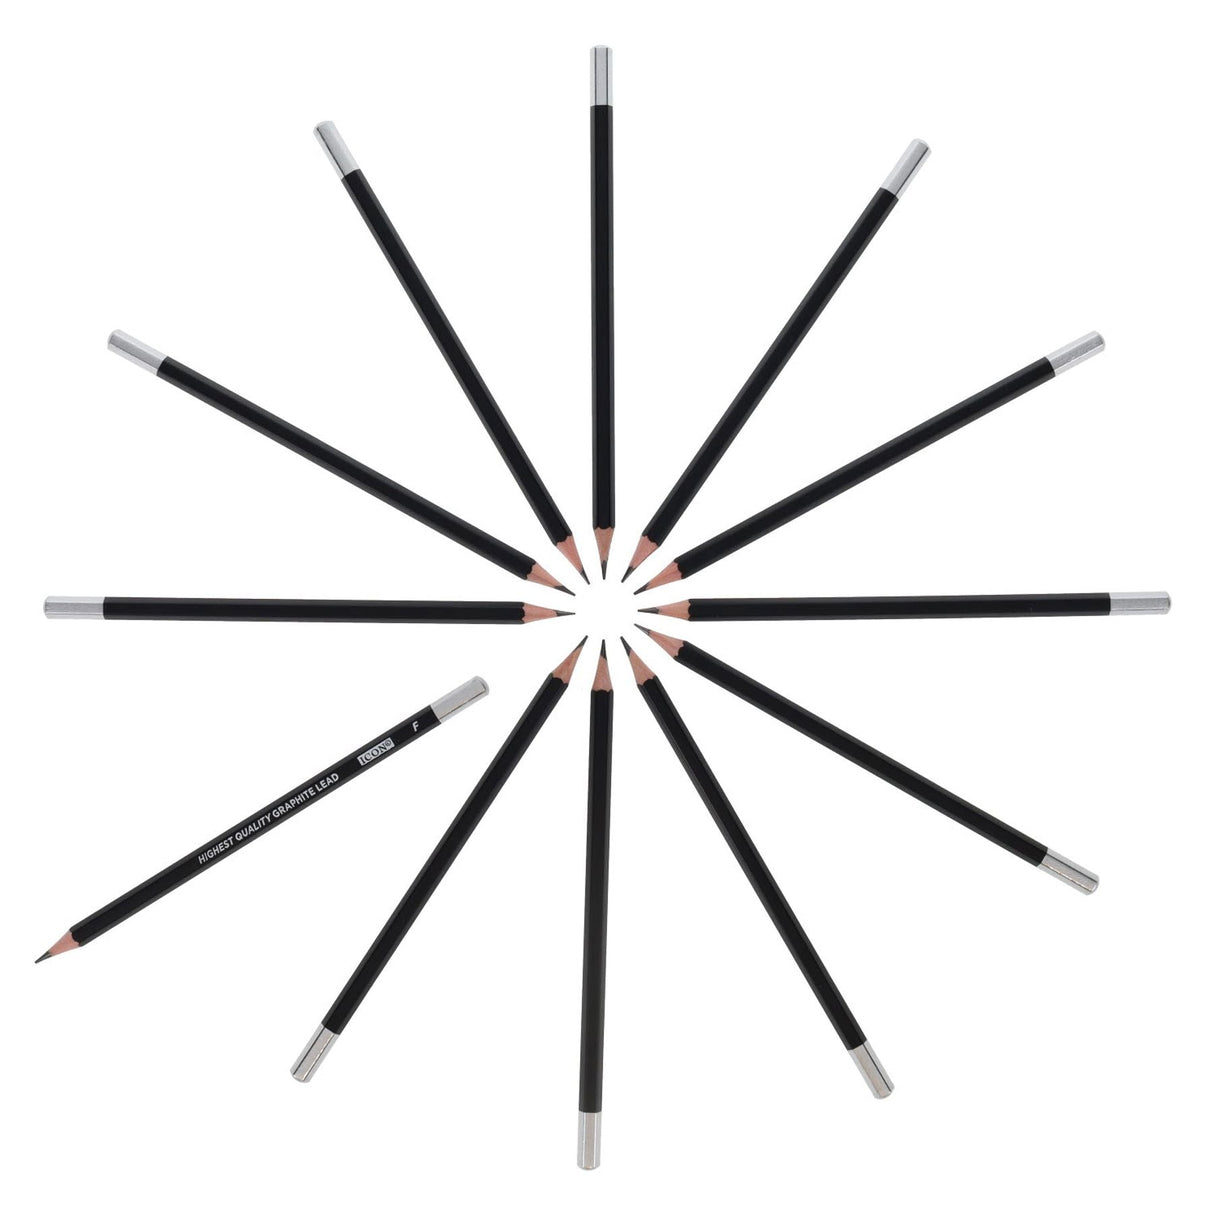 Icon Graphite Pencils - F - Box of 12 | Stationery Shop UK